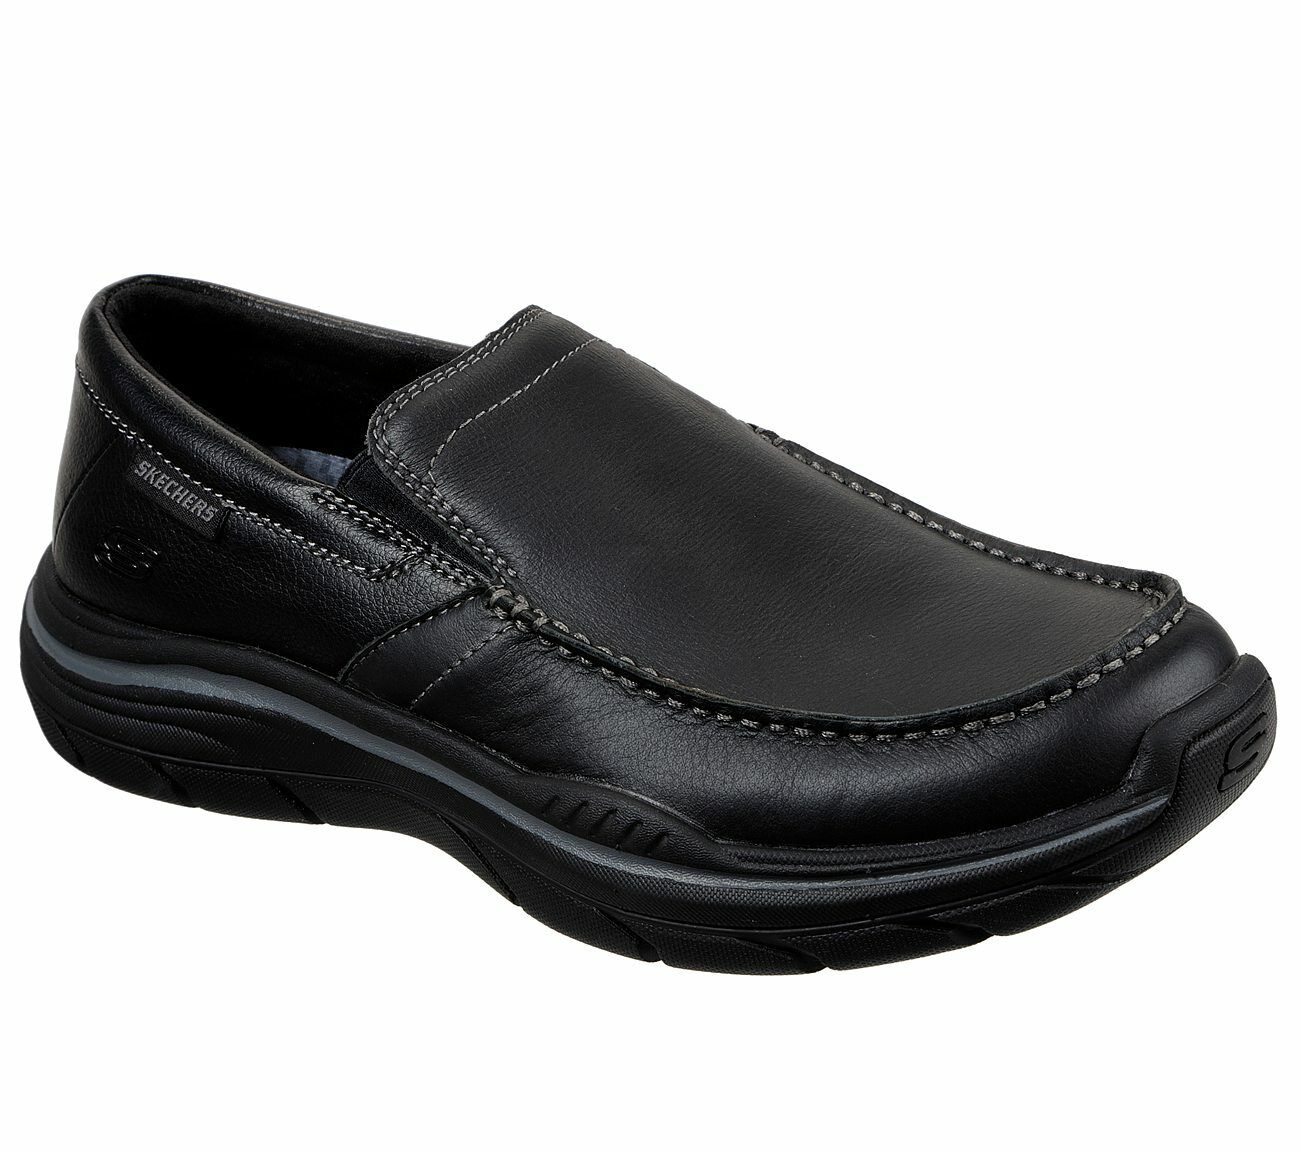 Skechers Black Shoes Men Memory specialty shop Foam Leat Slip Comfort On Casual Max 78% OFF